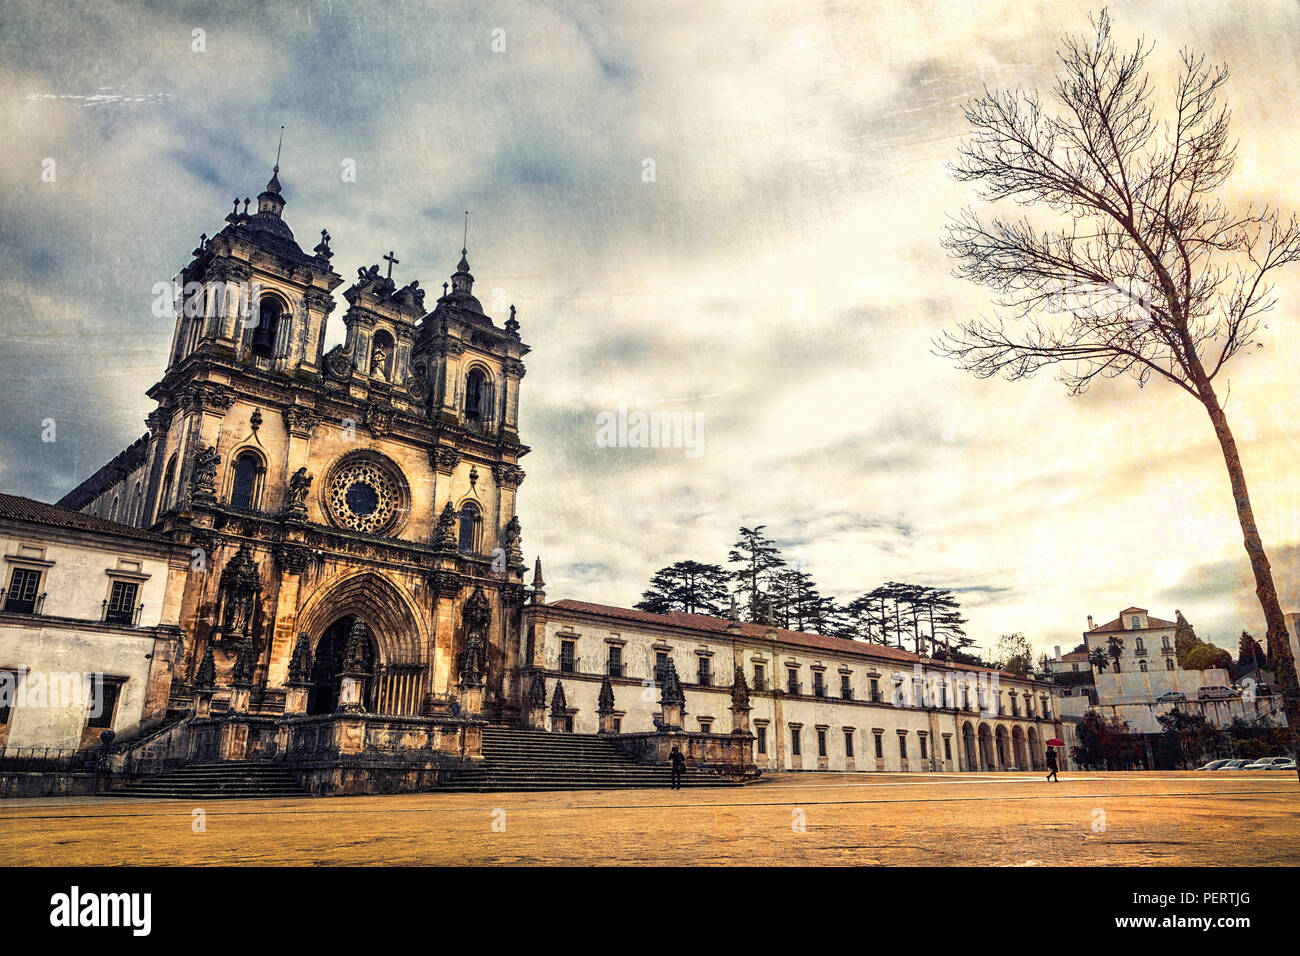 Beeindruckende Alcobaca Kloster, Panoramaaussicht, Portugal. Stockfoto